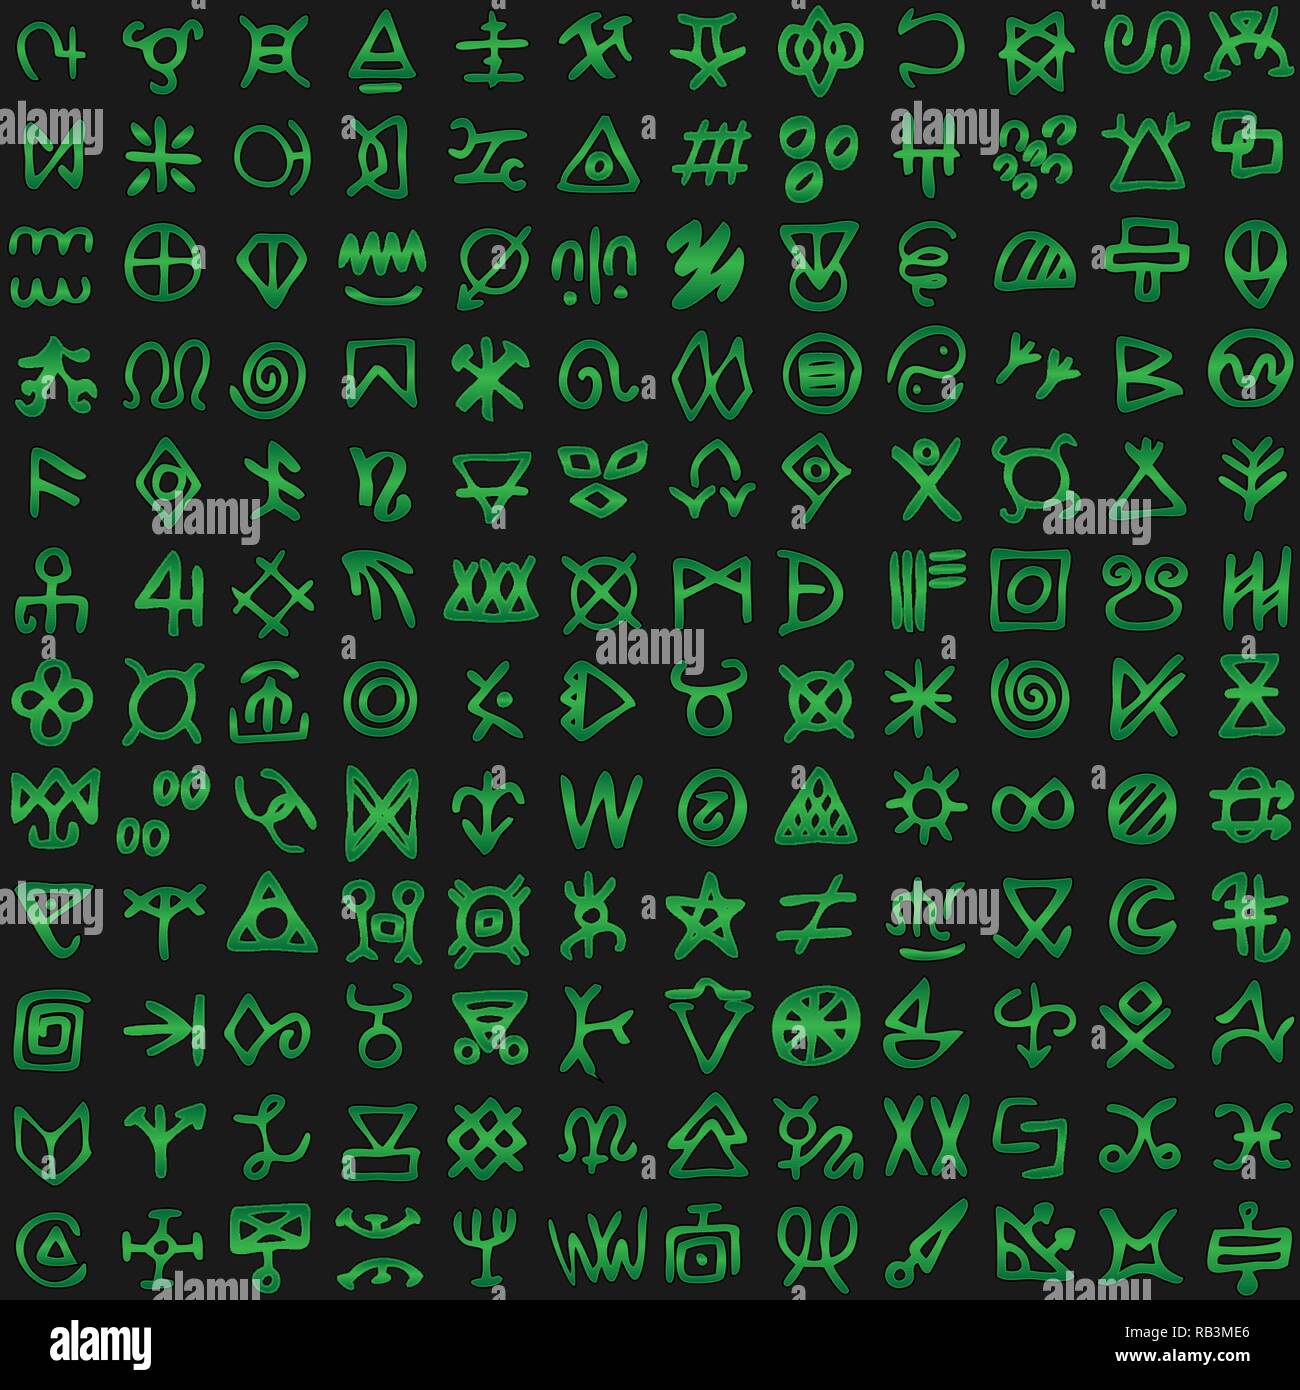 Digital green matrix and computer code symbols vector seamless background. Stock Vector